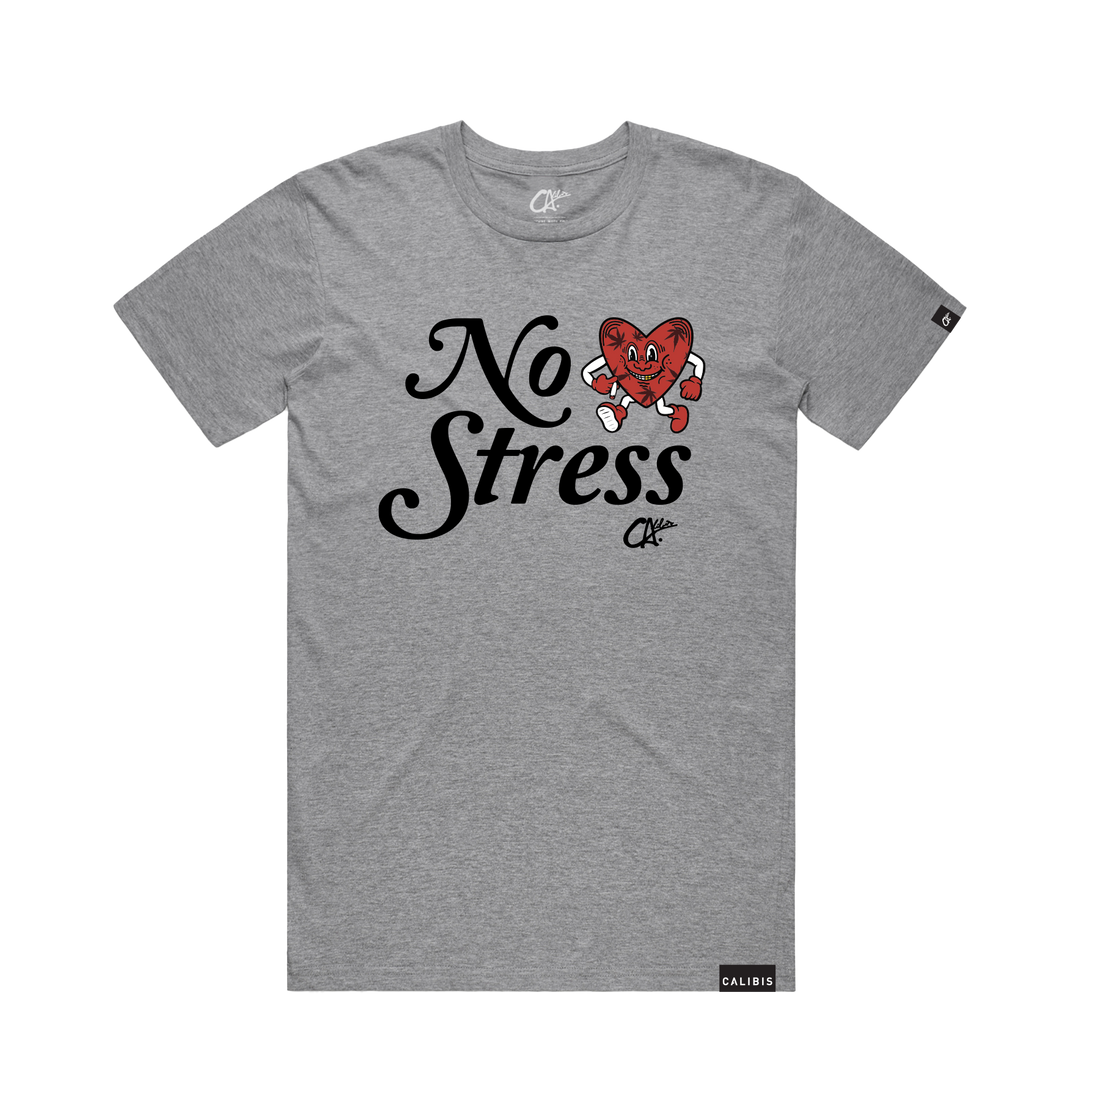 No Stress Tee